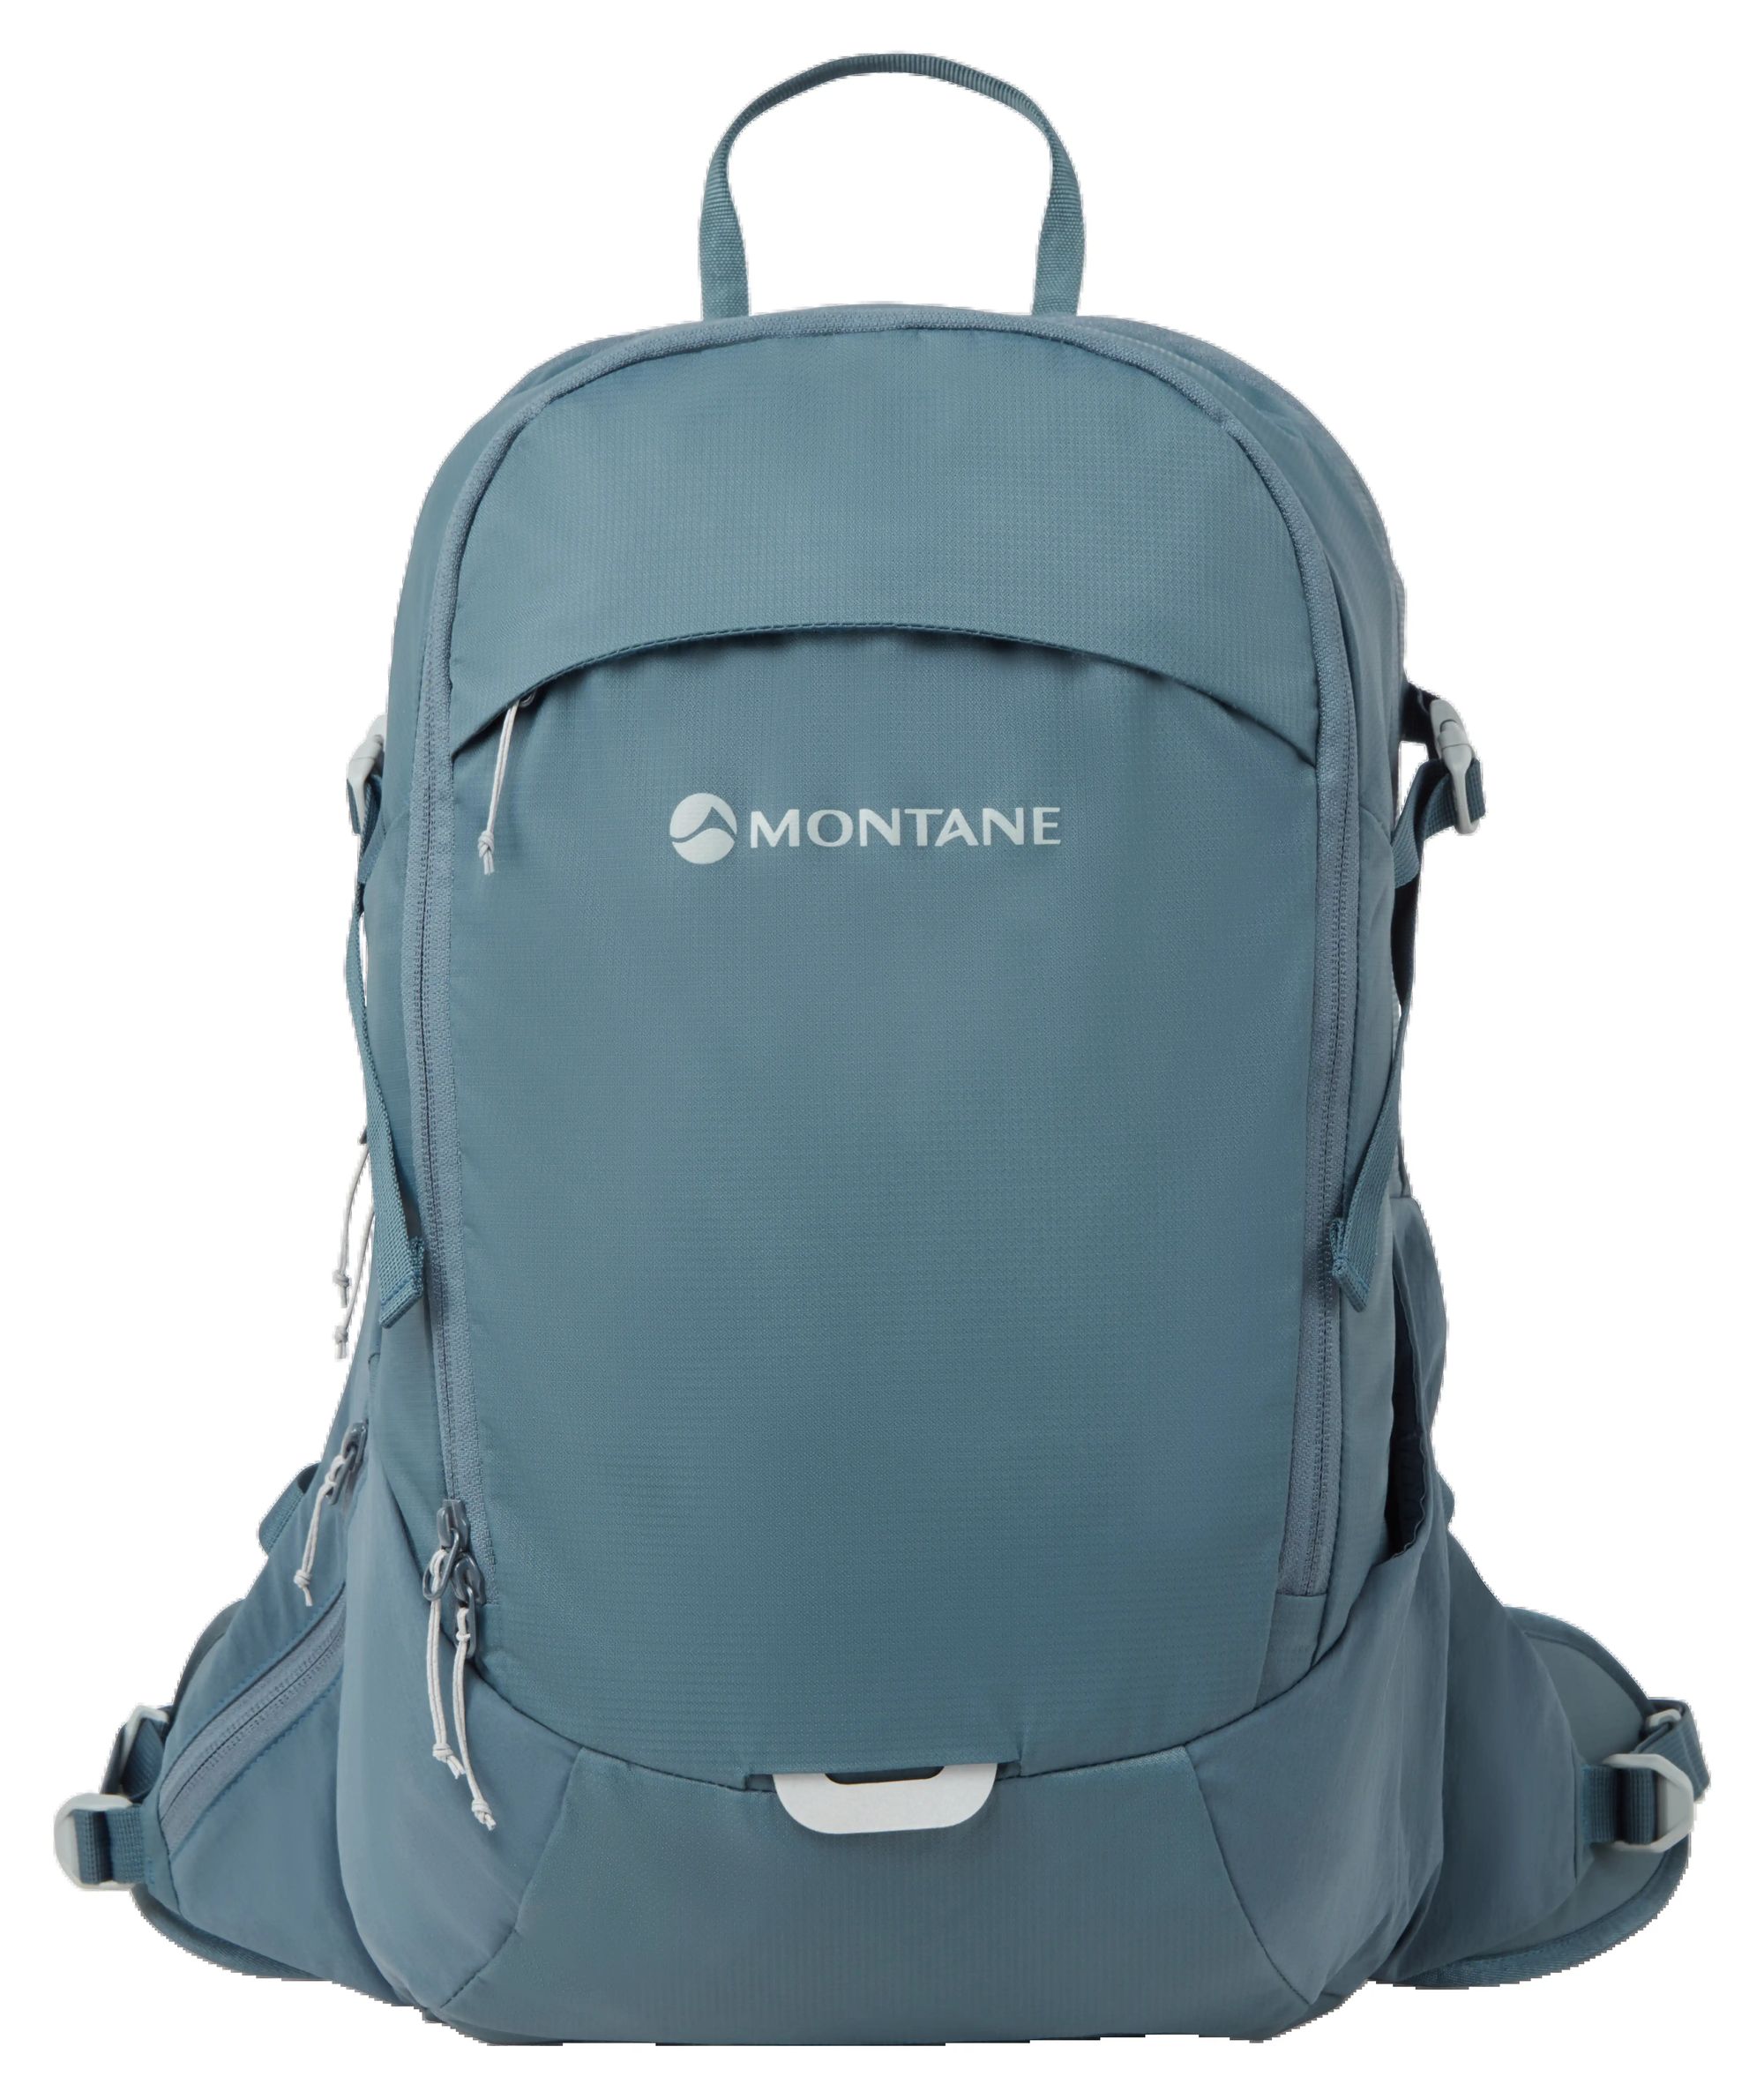 Montane ORBITON 20-ASTRO BLUE-ONE SIZE batoh modrý